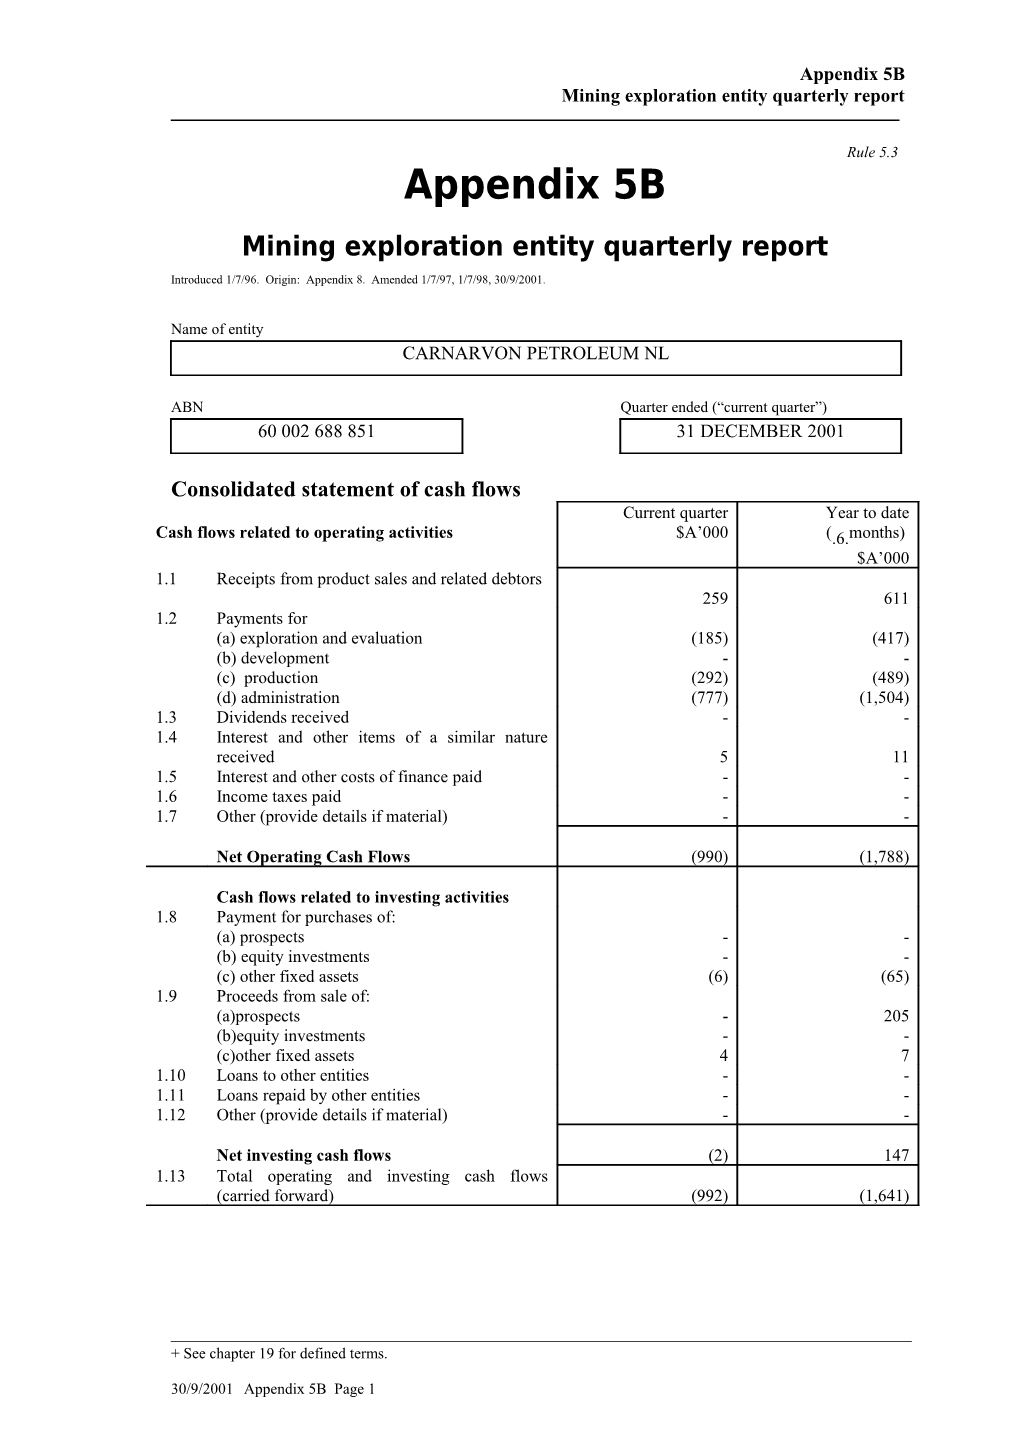 Mining Exploration Entity Quarterly Report